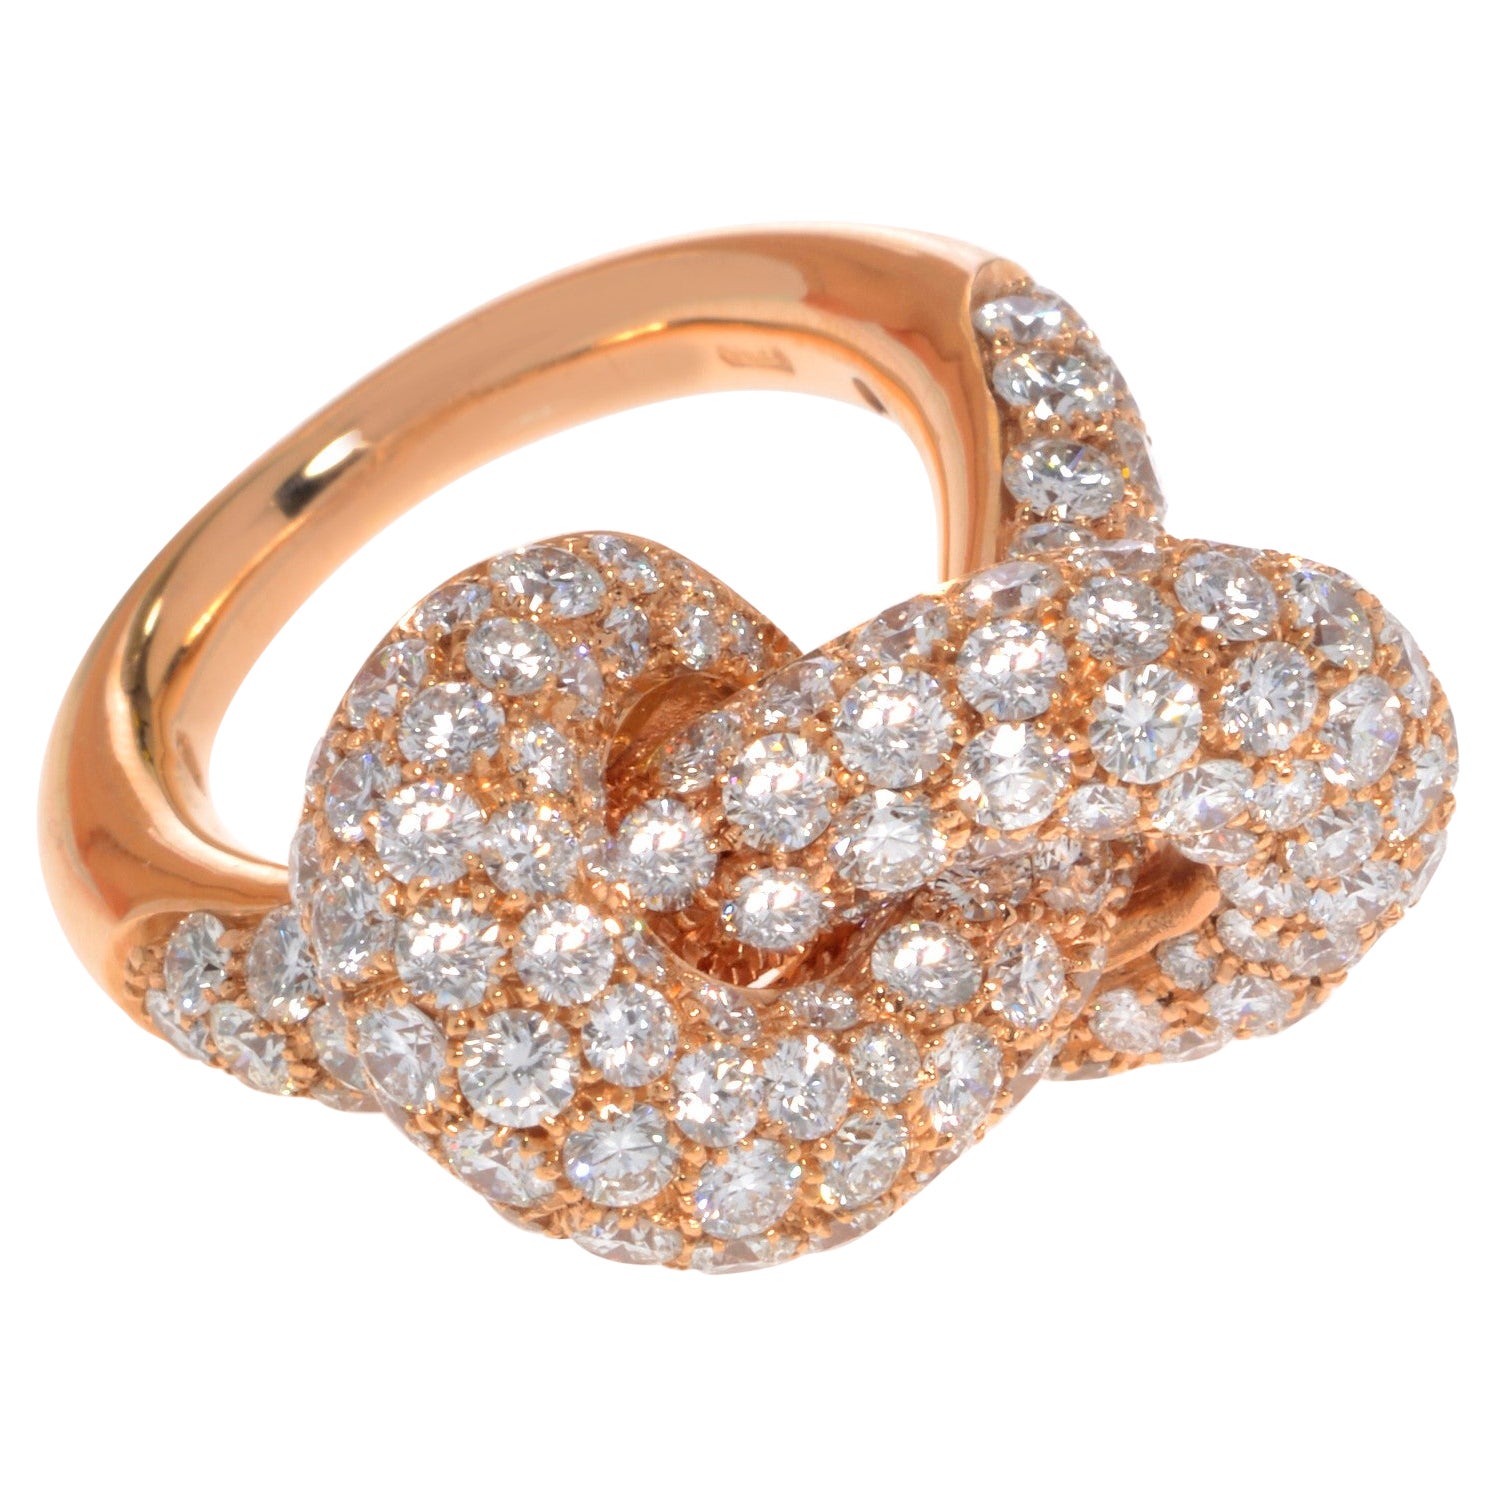 Luca Carati Diamond Wide Knot Ladies Ring 18K Rose Gold 5.05Cttw Size 5.25 en vente